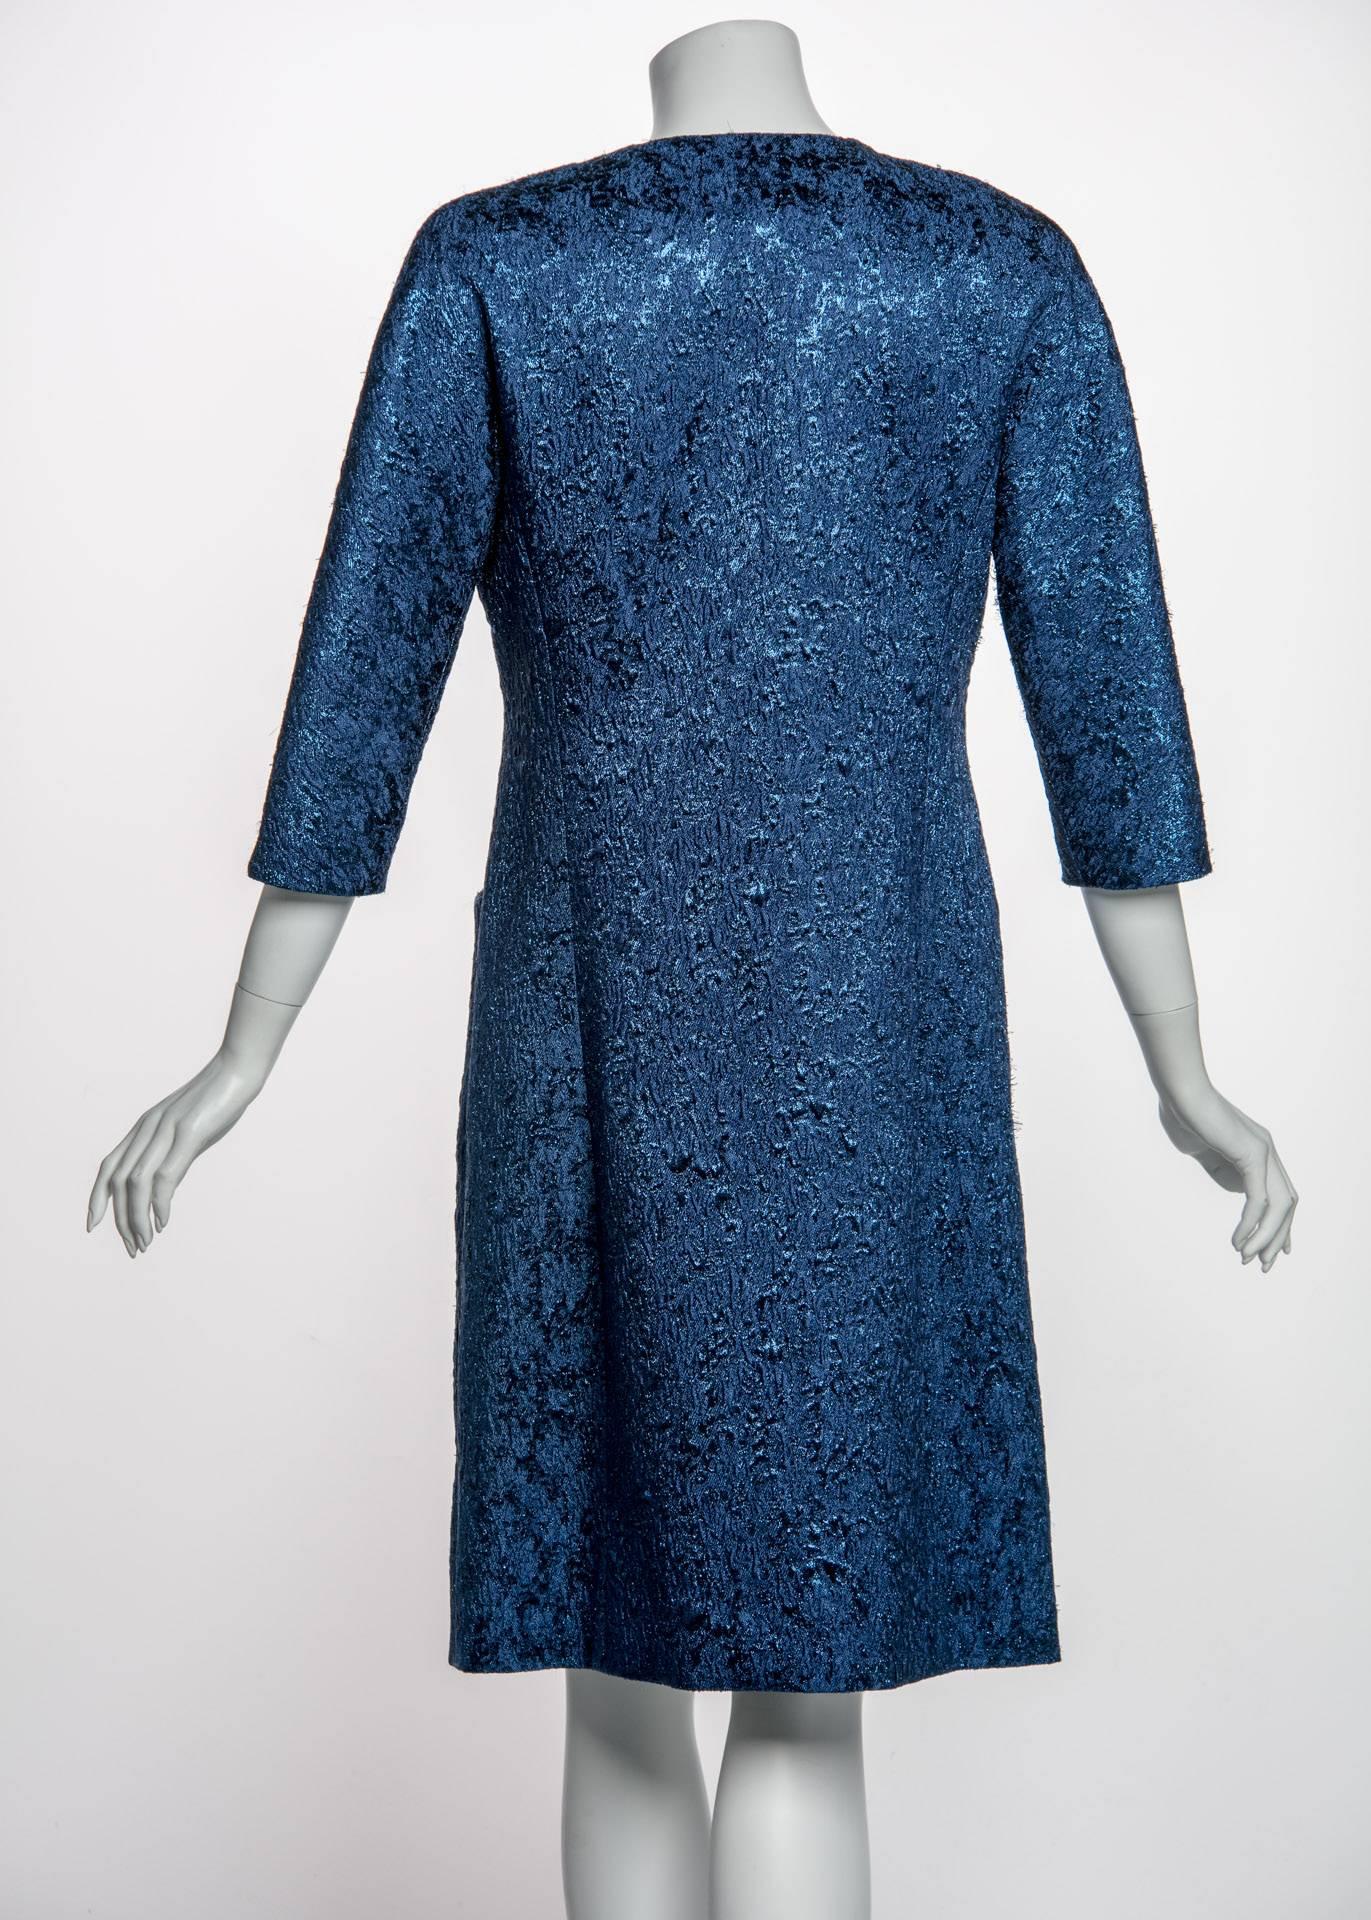 Balenciaga Edition Couture Sapphire Blue Matelassé Princess Seam Evening Coat For Sale 2